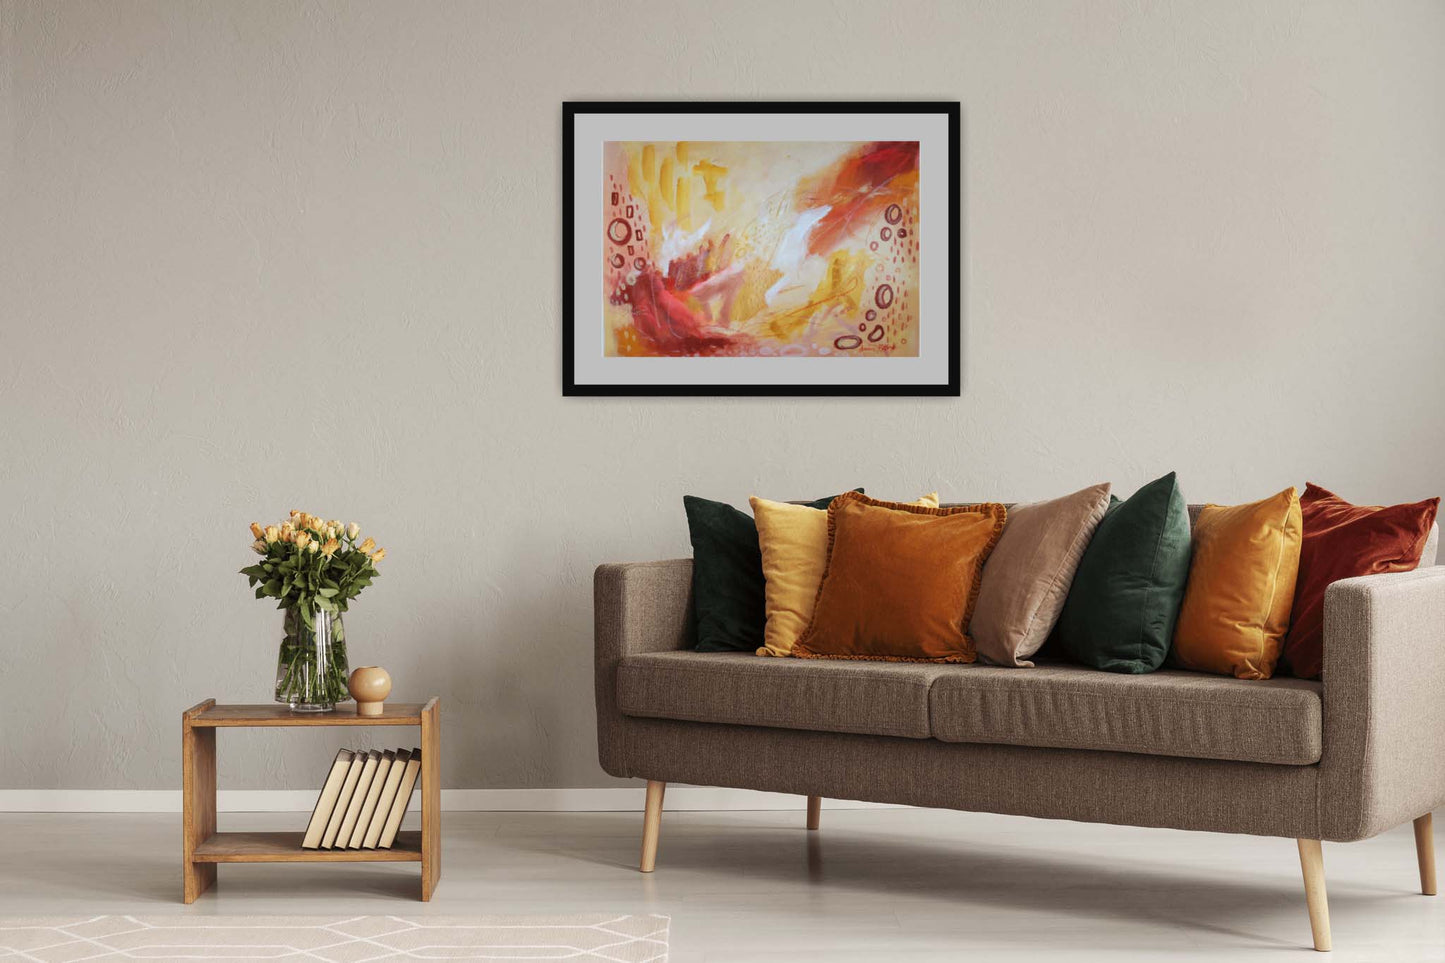 Light My Fire - Original Abstract Art Painting 24x18 Paper